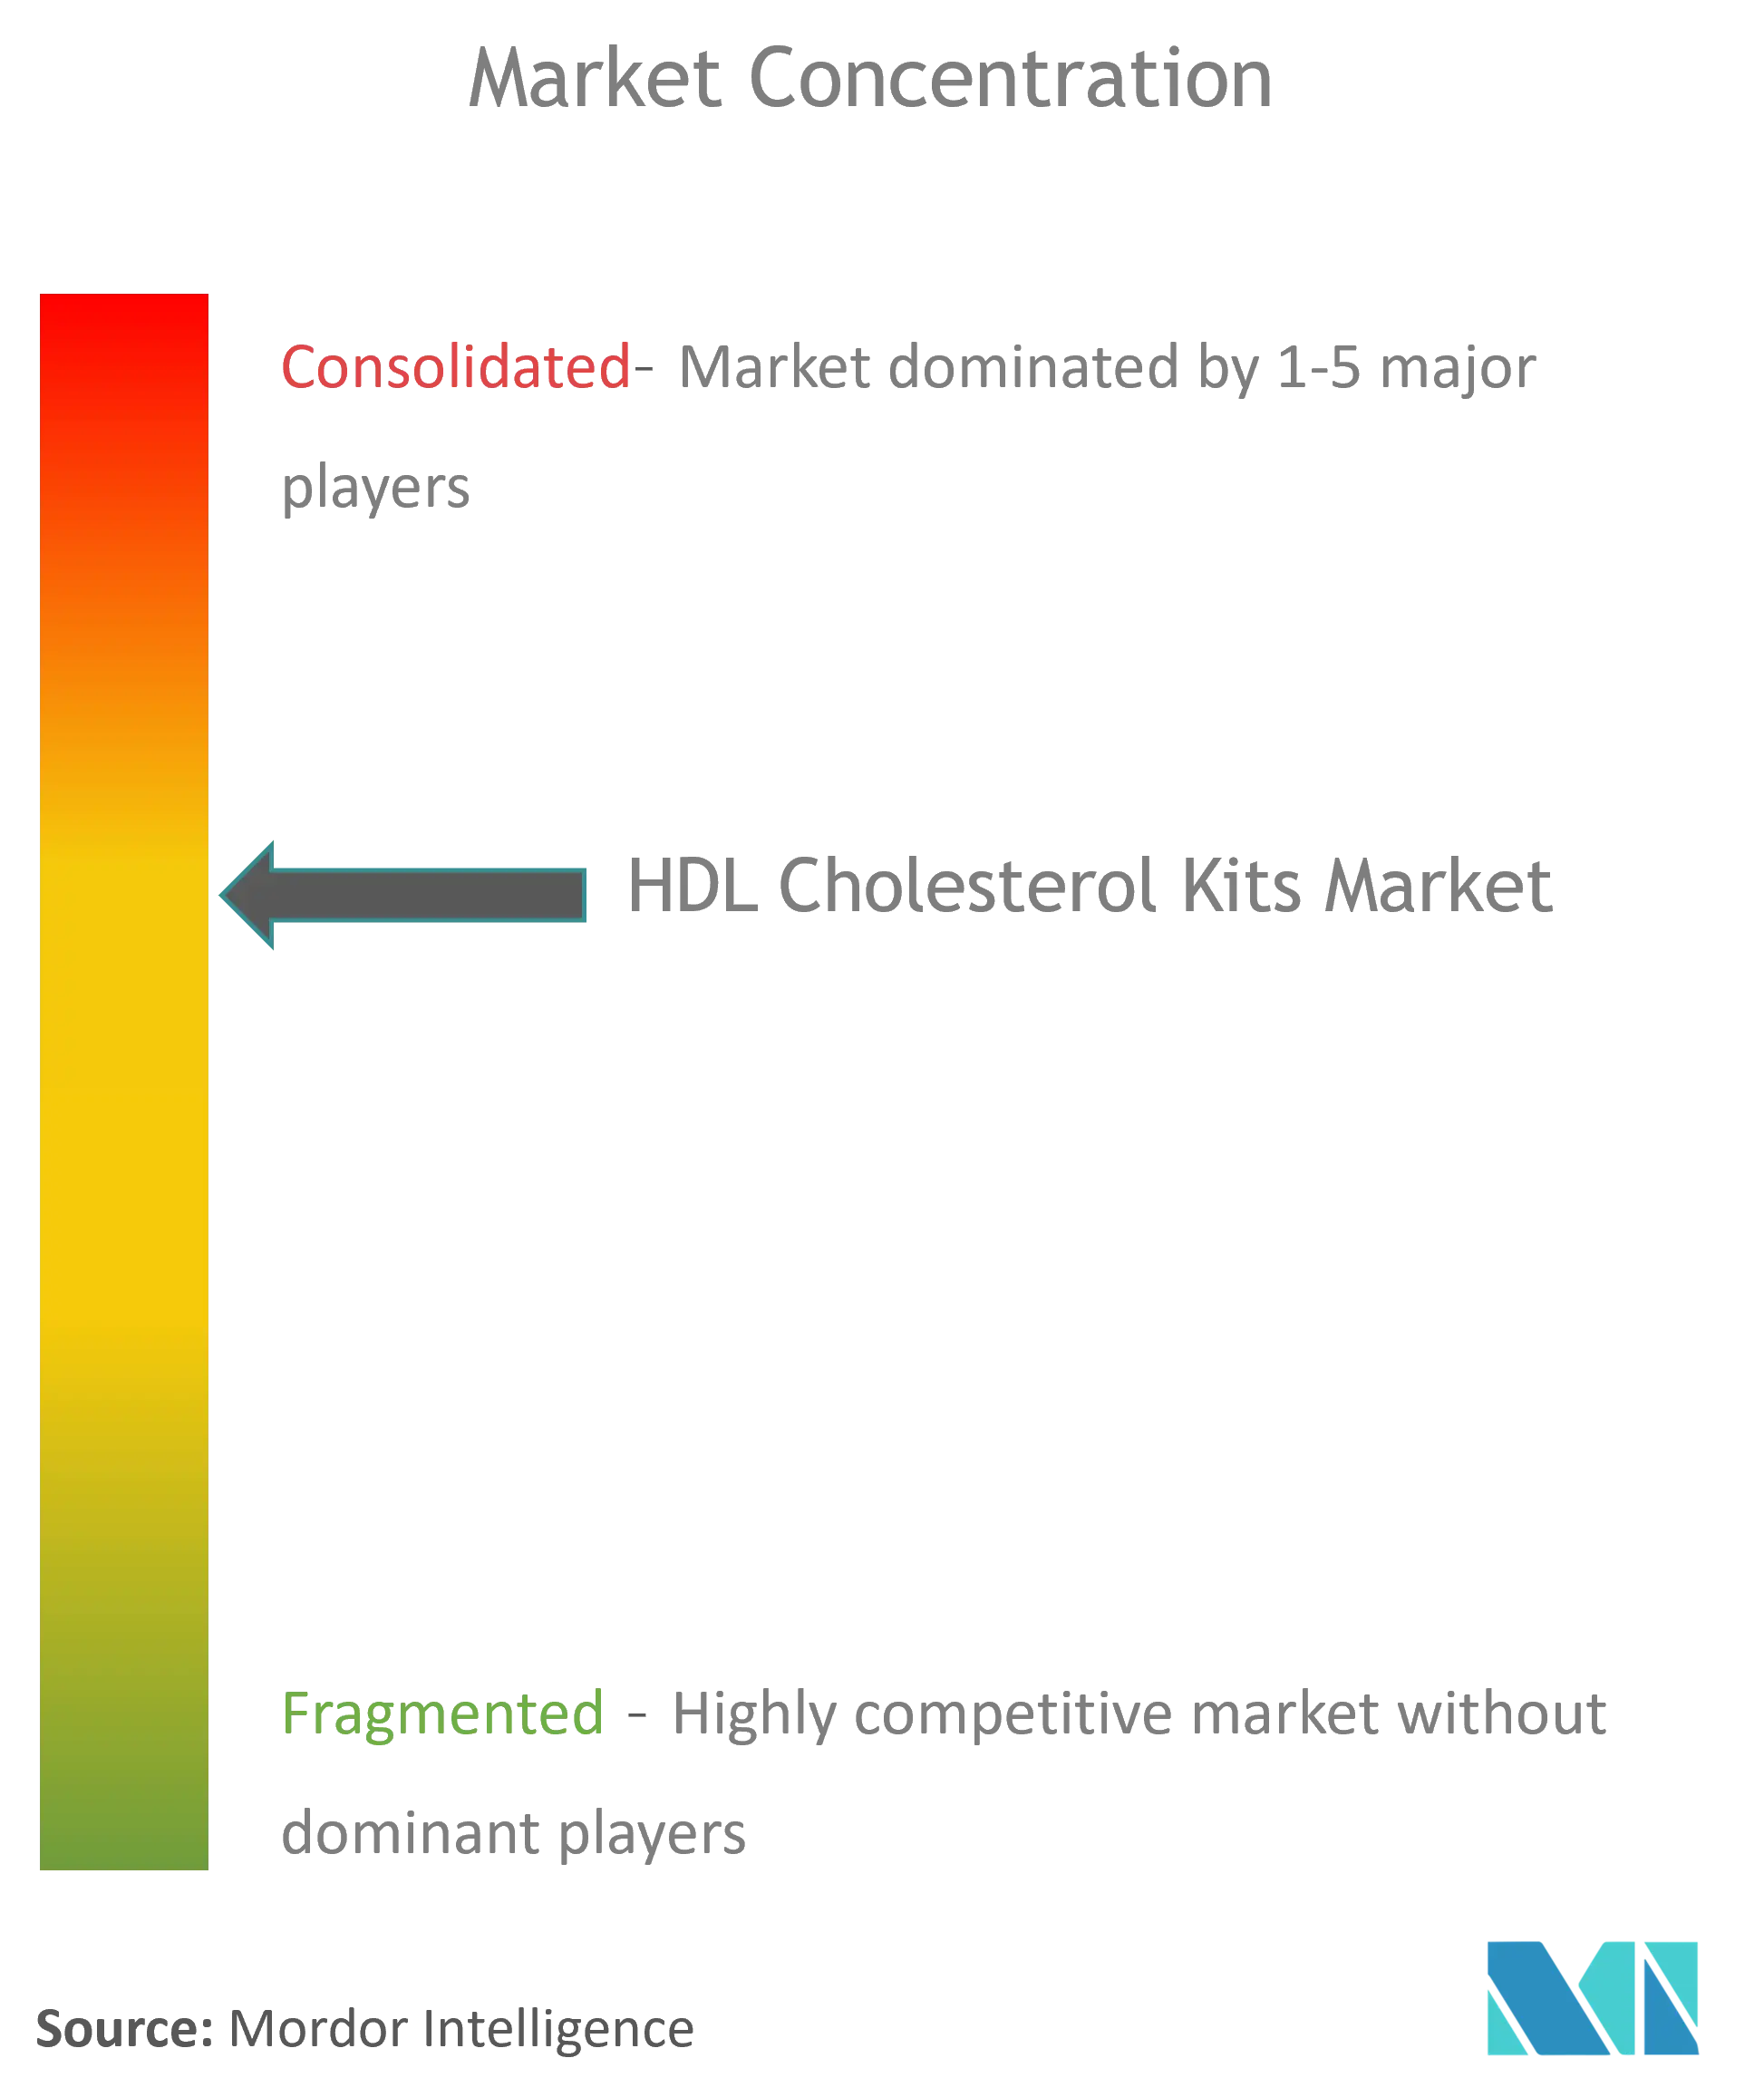 HDL Cholesterol Kits Market Concentration